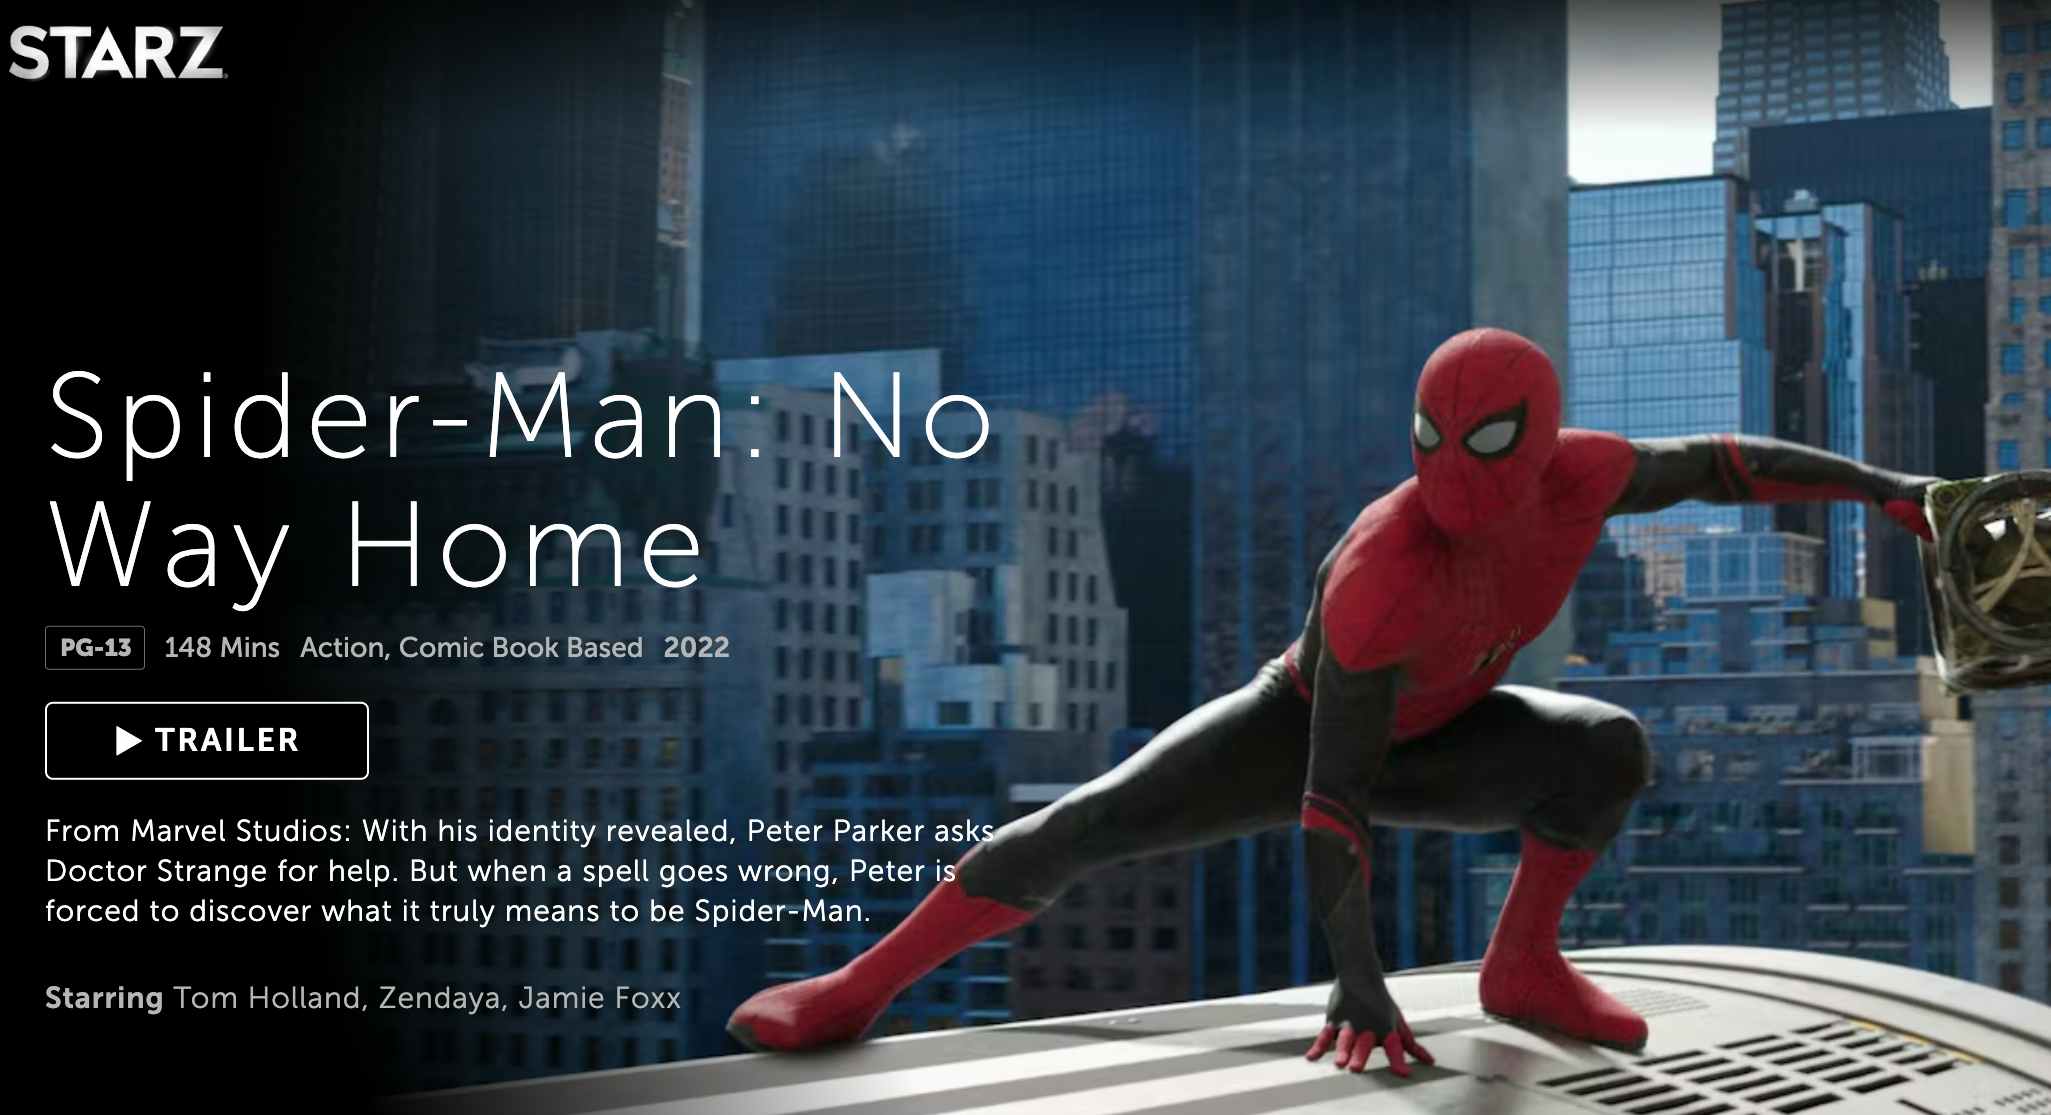 spider-man no way home screenshot from Starz